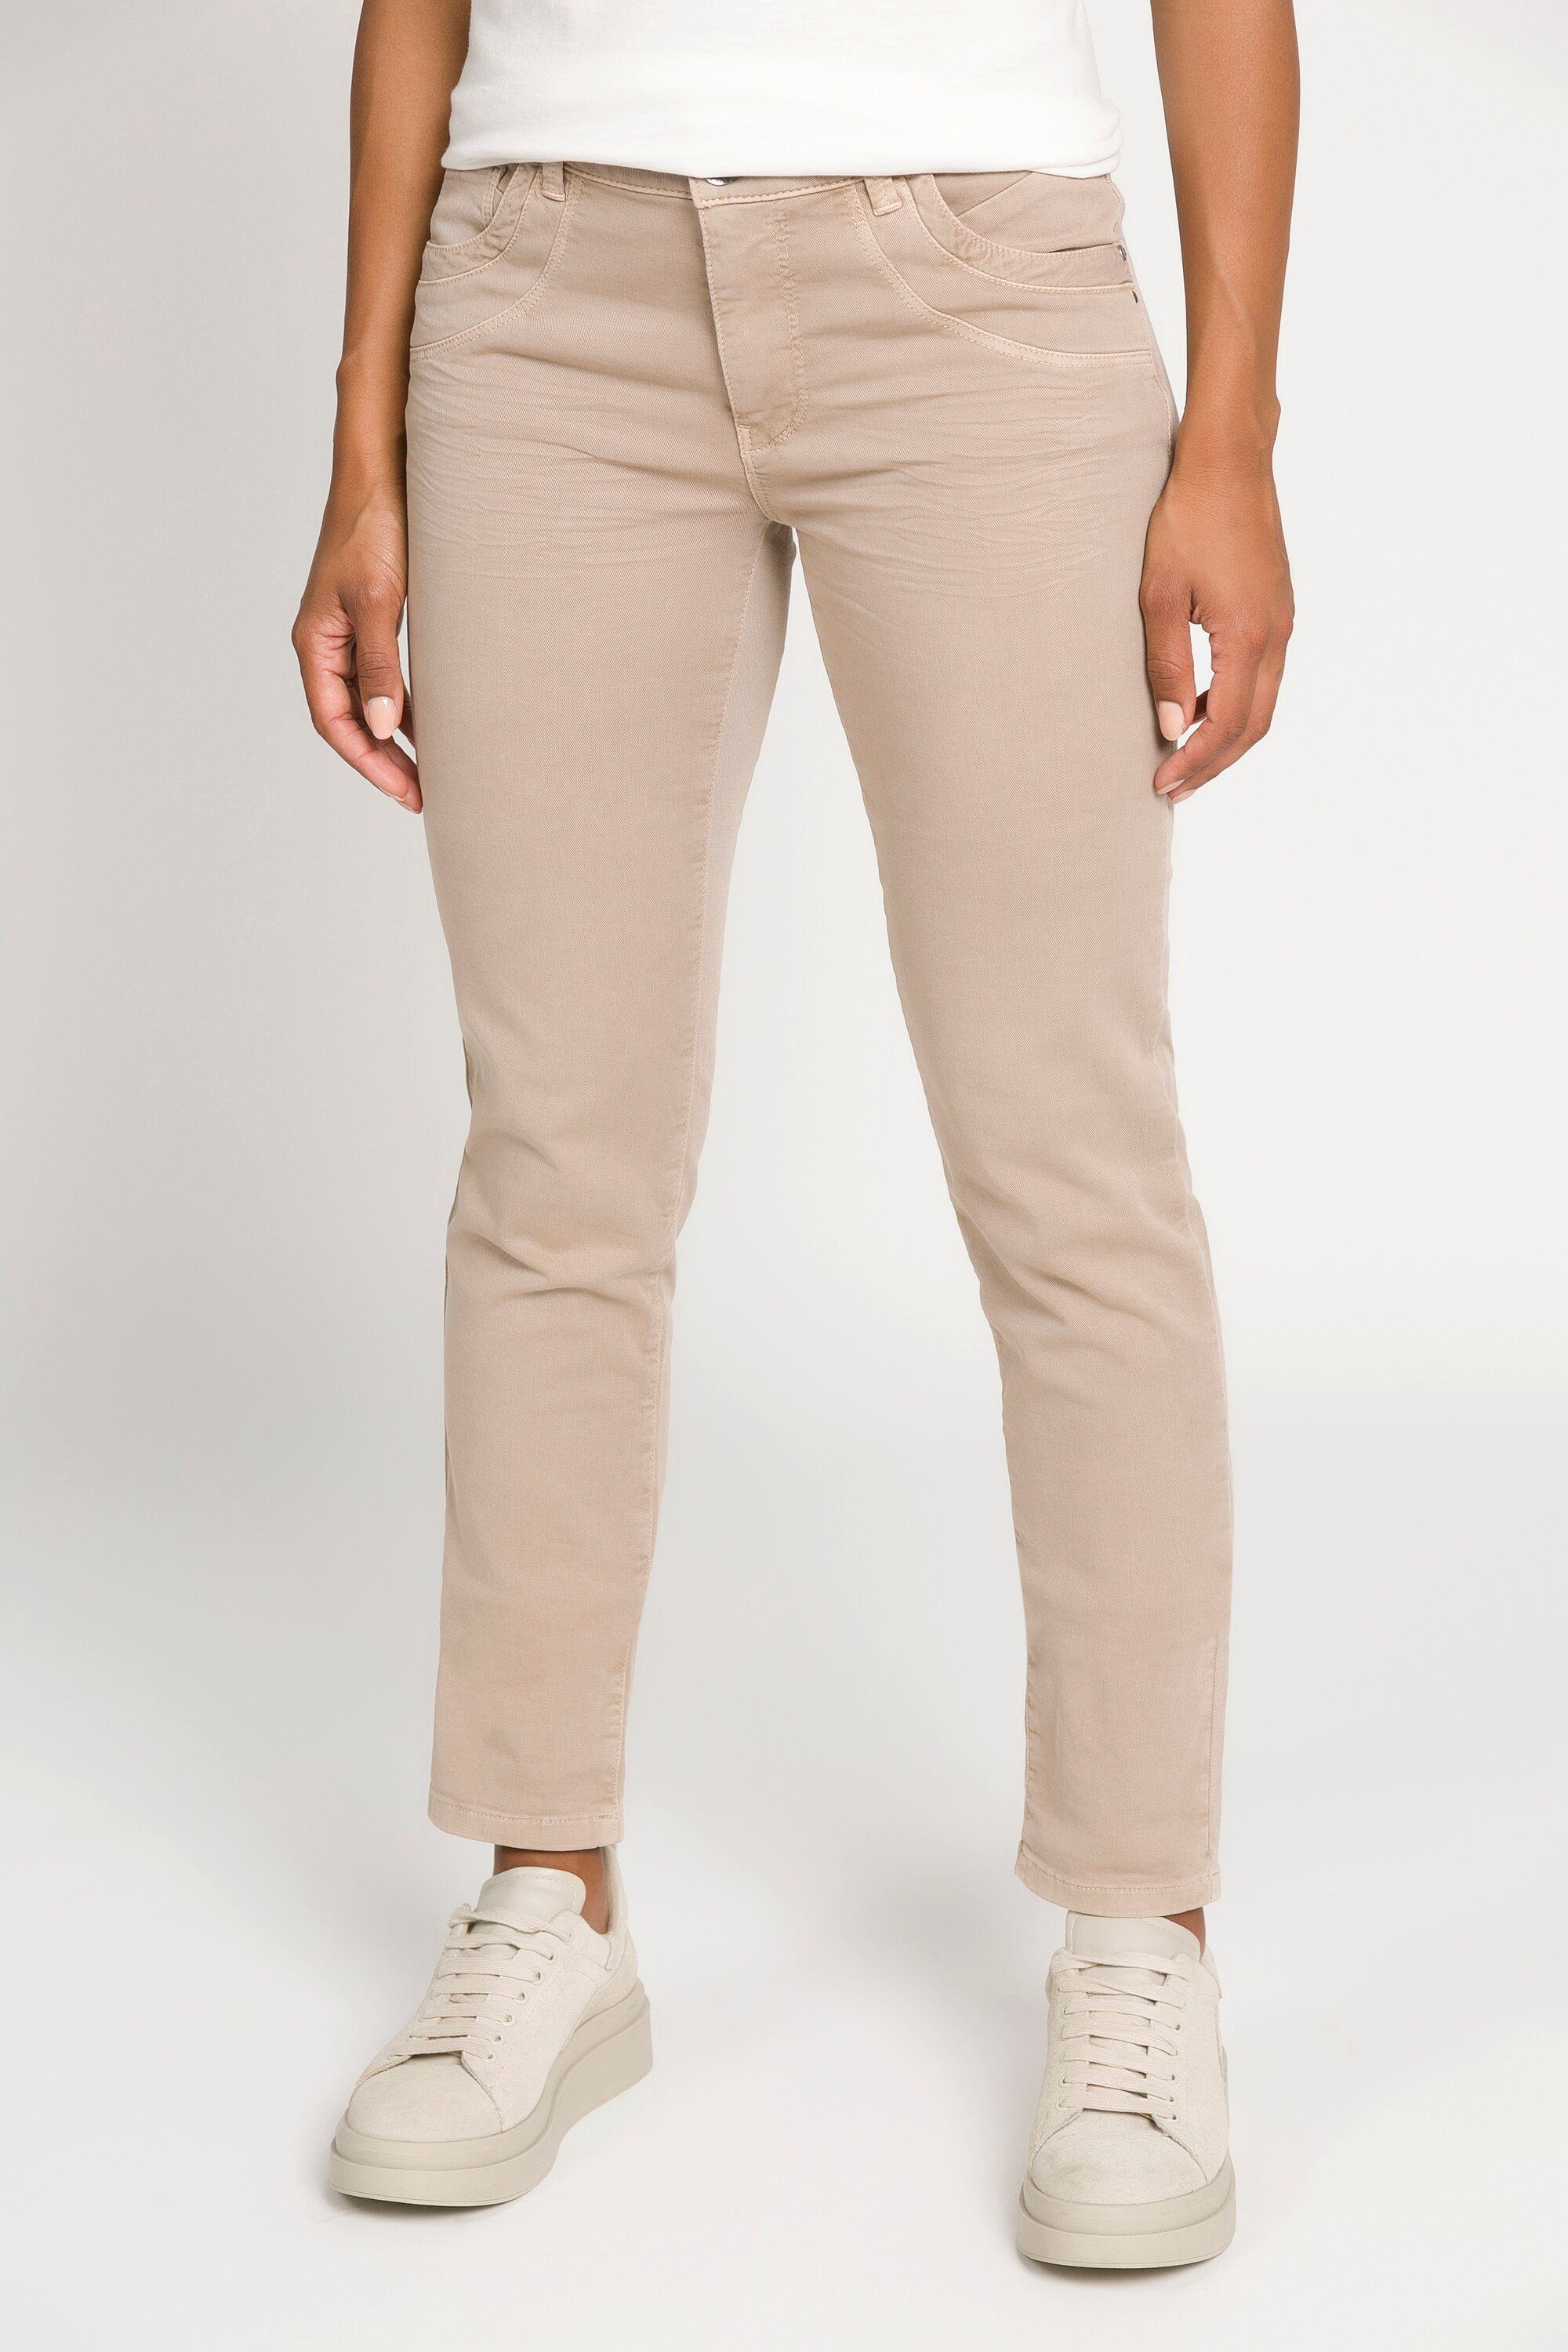 Gina Laura Julia Bein Colorjeans schmales 5-Pocket 5-Pocket-Jeans